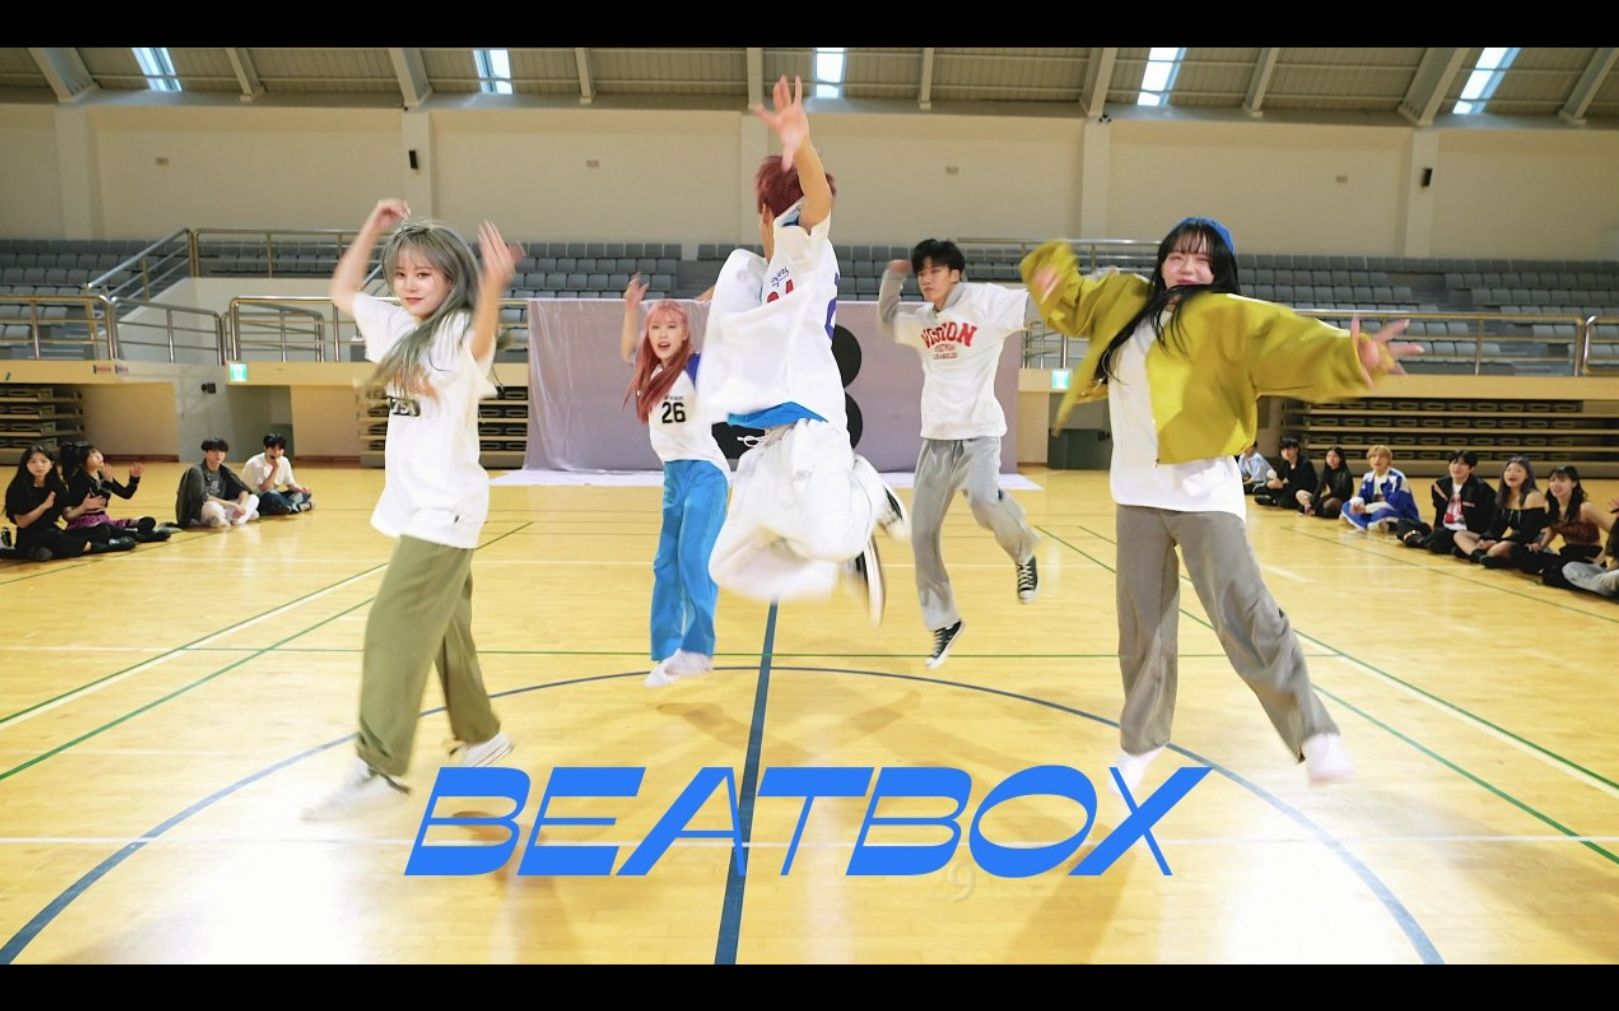 [AB | 屋角?] NCT DREAM - Beatbox | 翻跳 Dance Cover